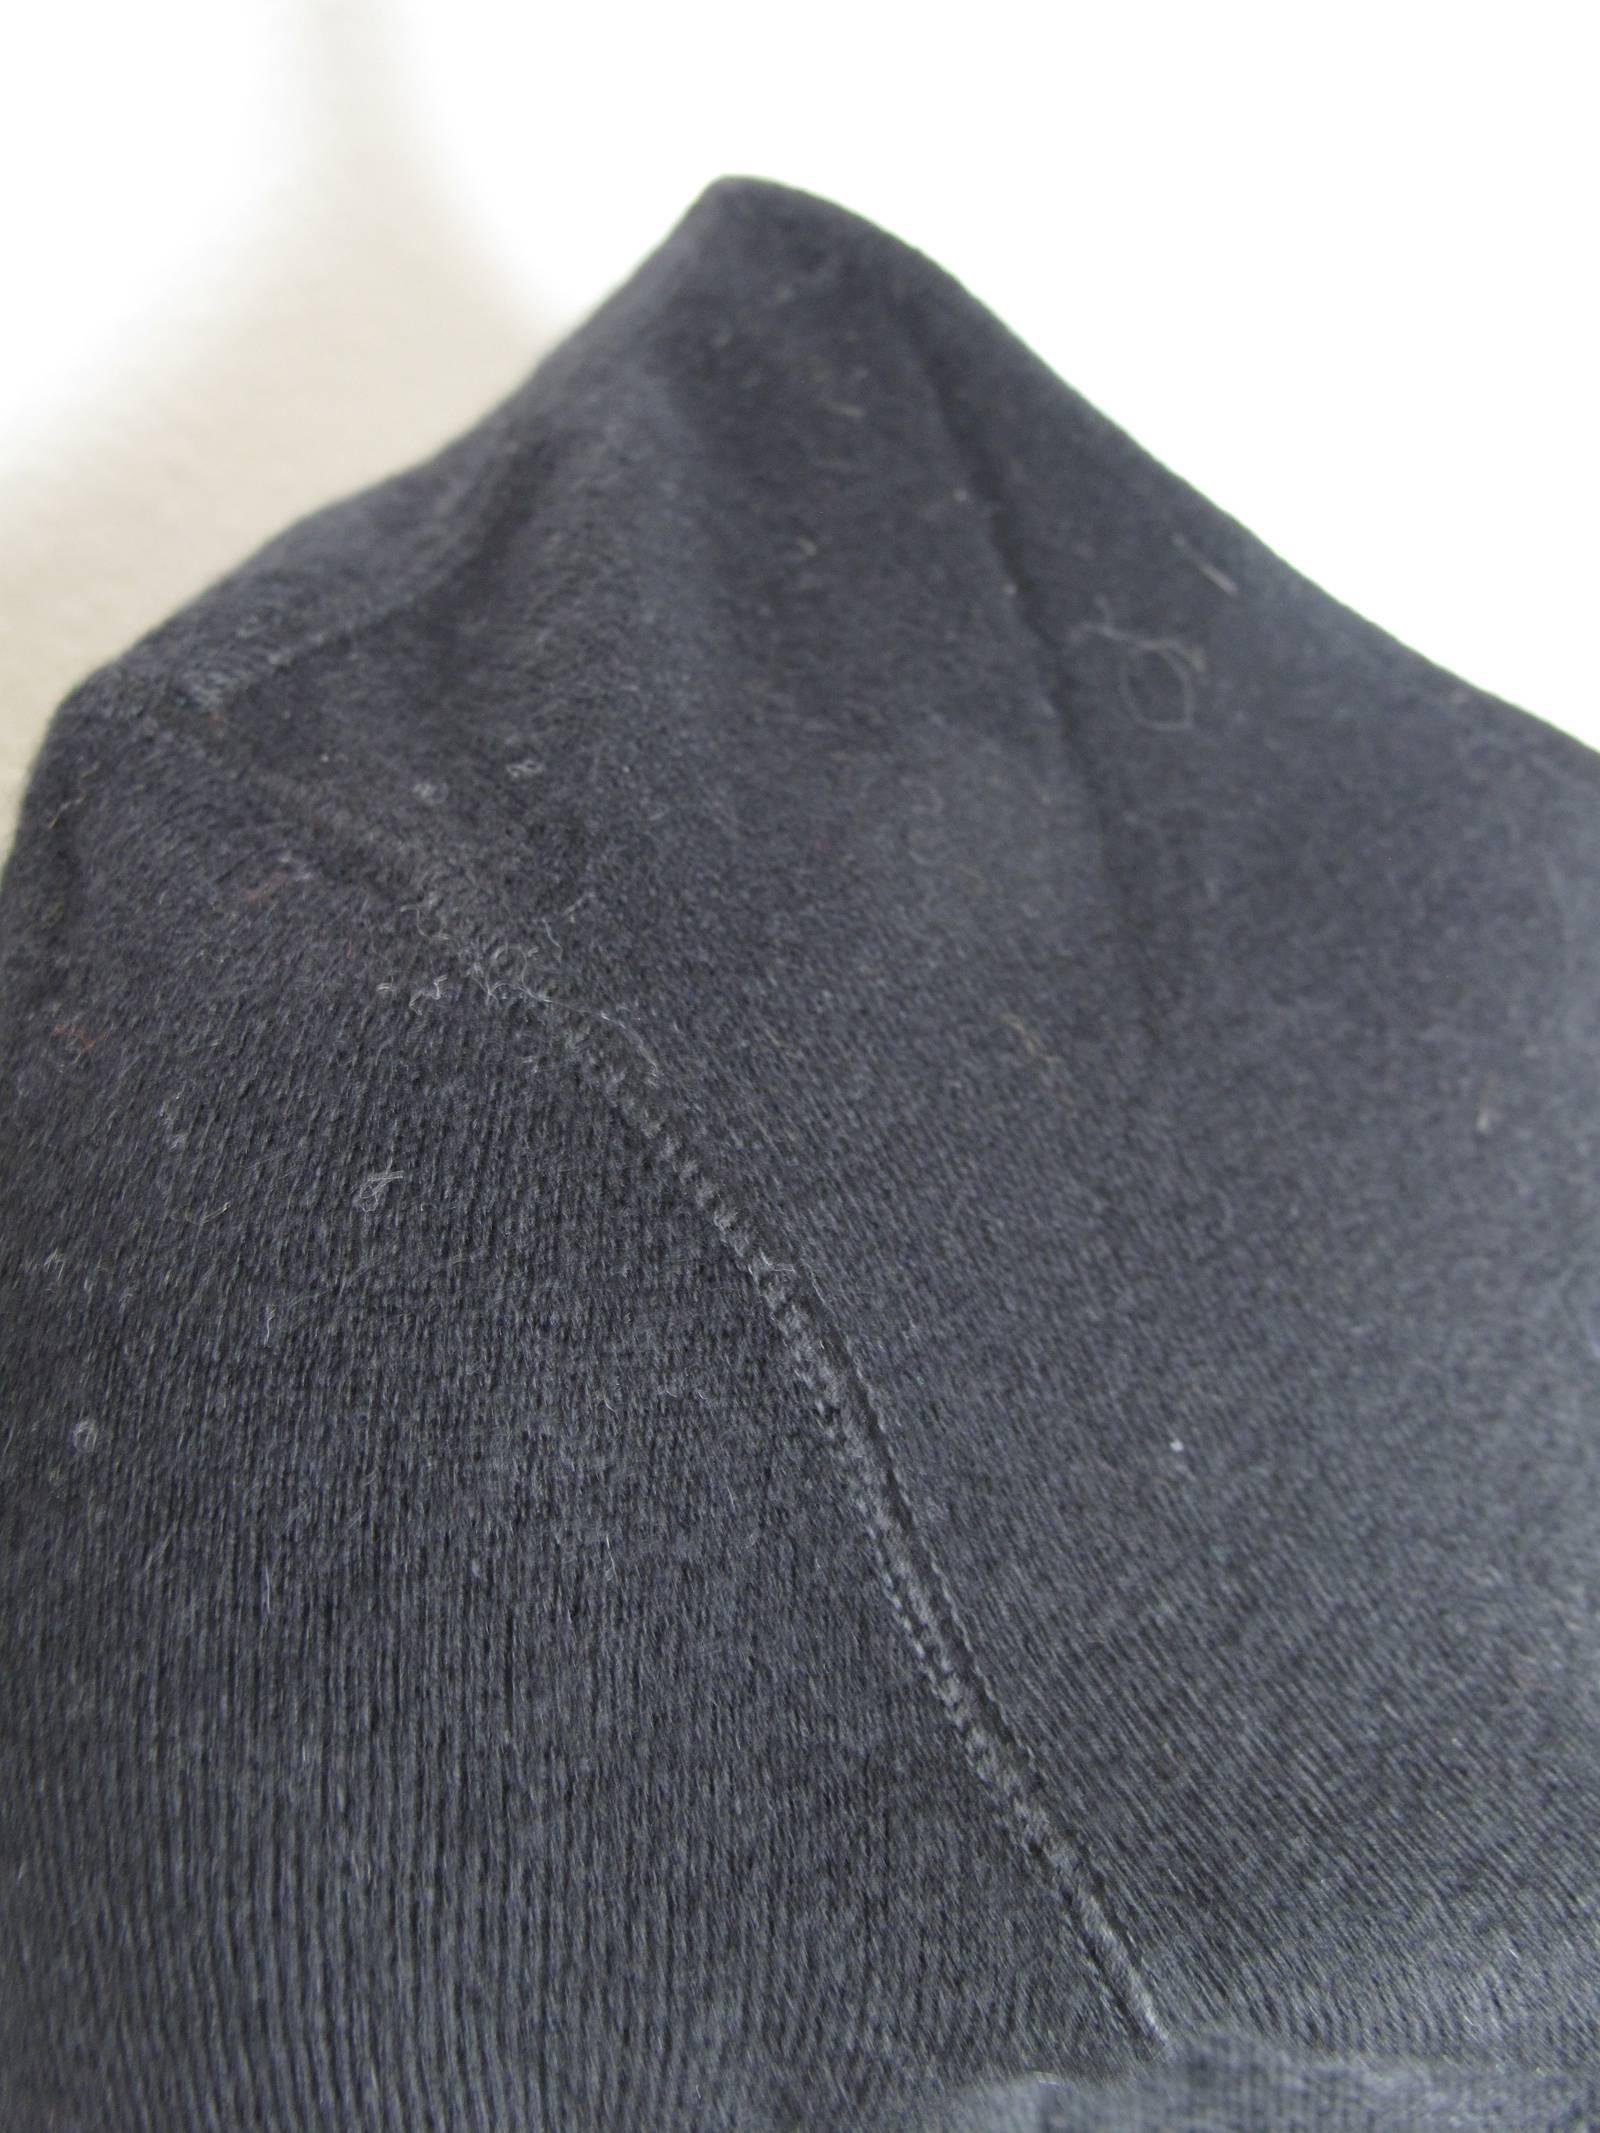 Chanel black cashmere/ silk t shirt.  Condition :Excellent. Circa 1999.  Size 42/ us 6 - 8